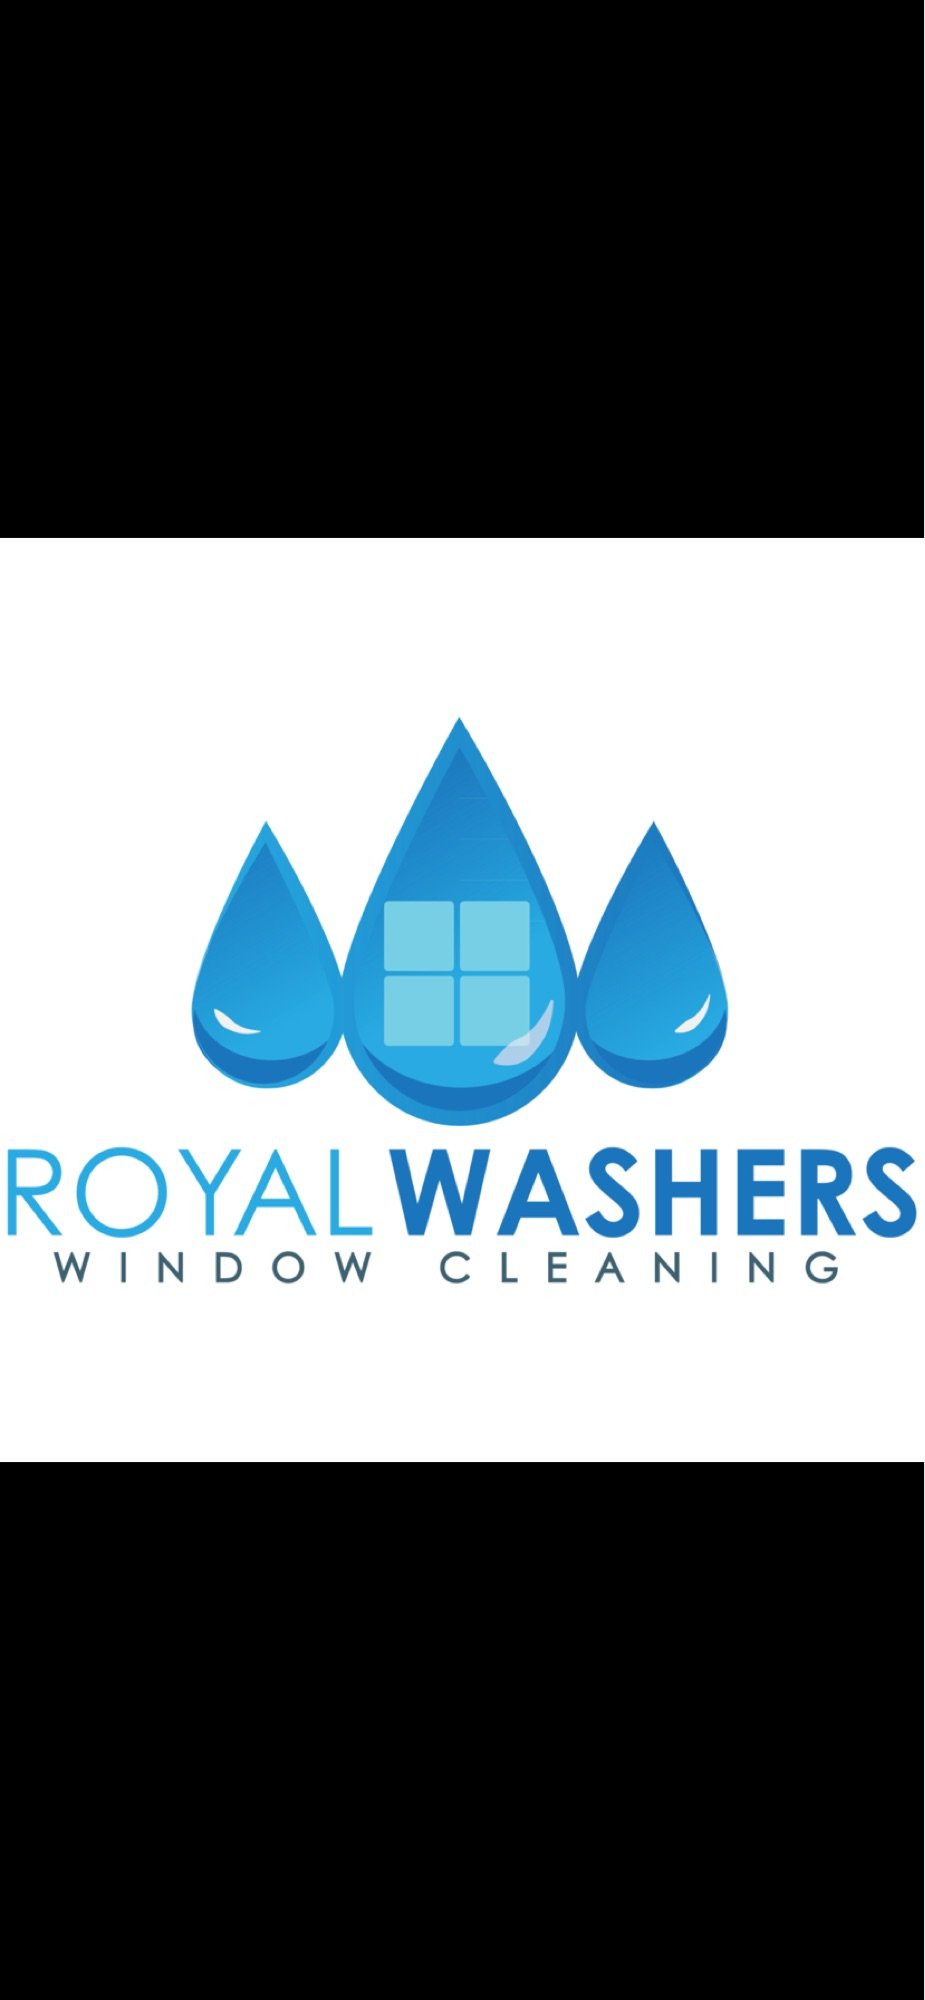 Royal Washers Window Cleaning Logo